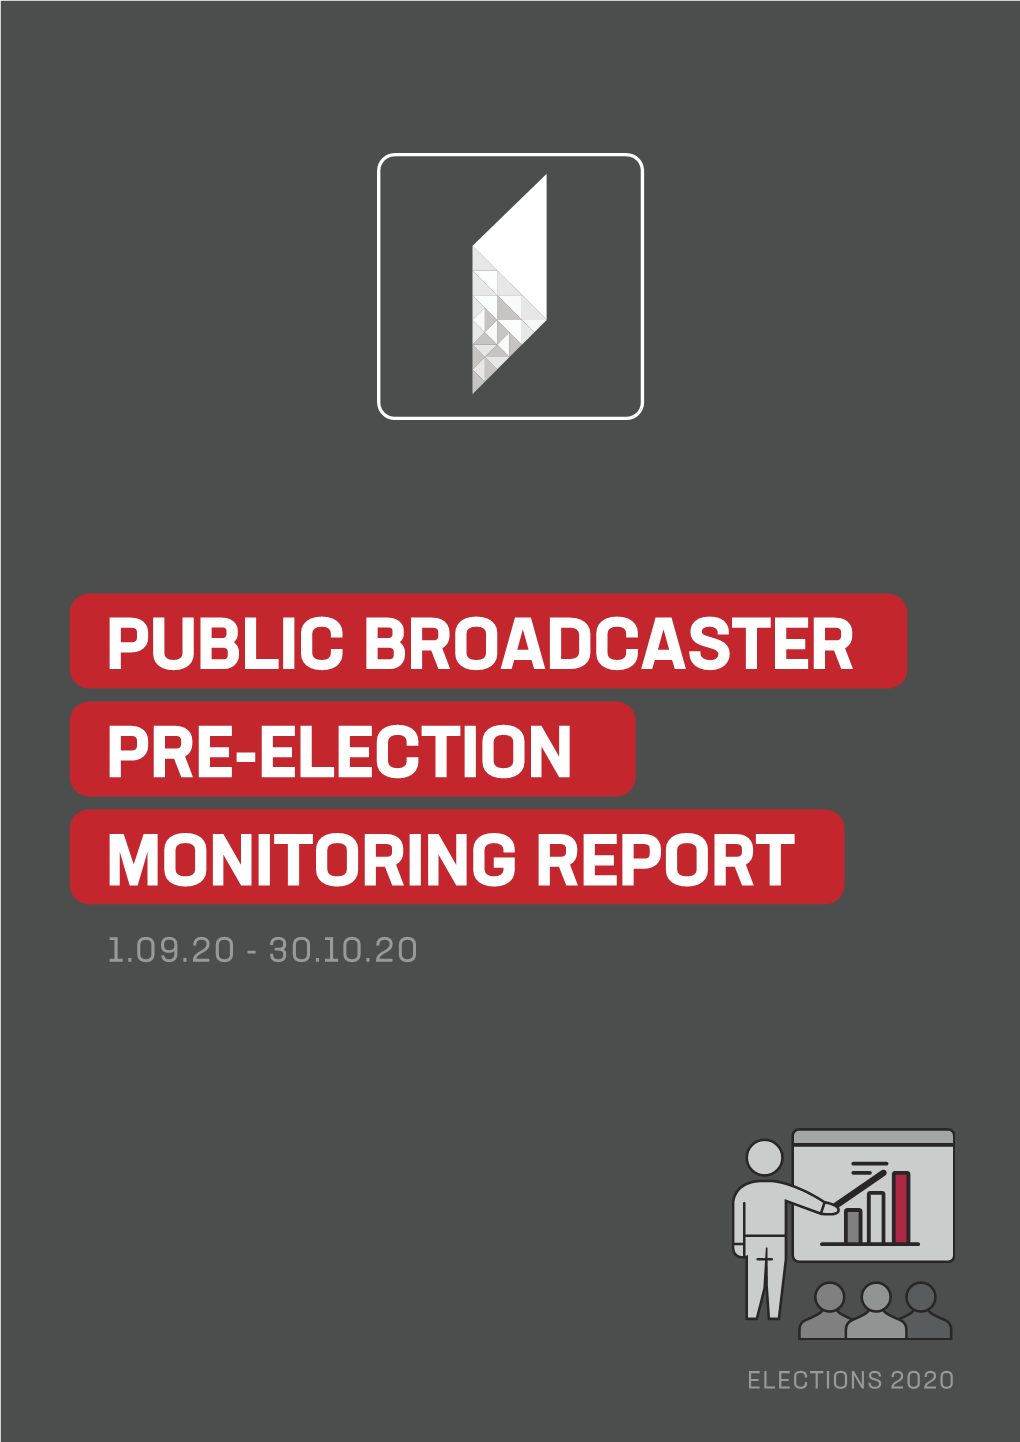 Public Broadcaster Pre-Election Monitoring Report 1.09.20 - 30.10.20